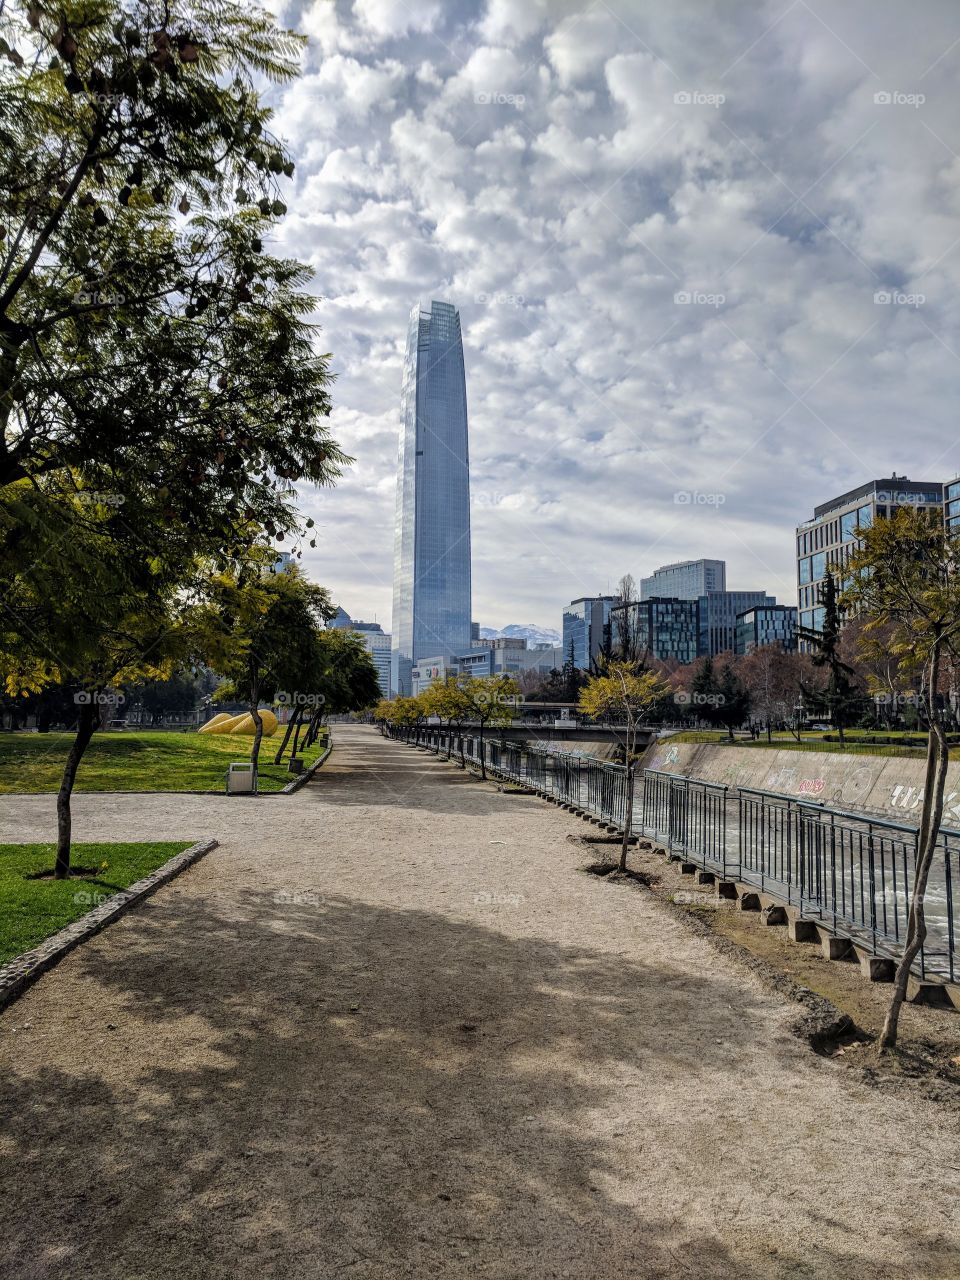 Urban Park